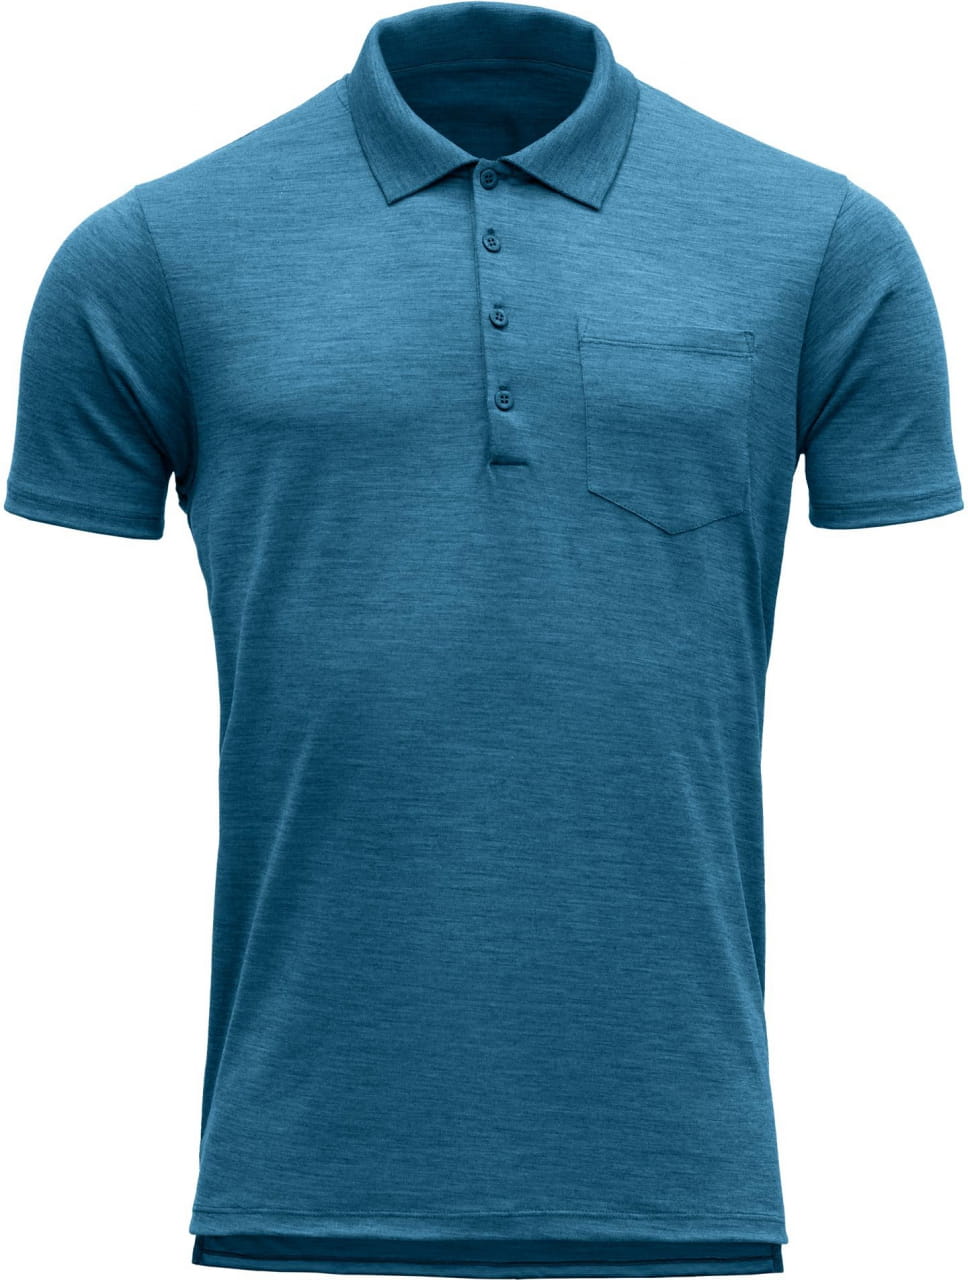 Pólók Devold Grip Man Pique Shirt W/Pocket